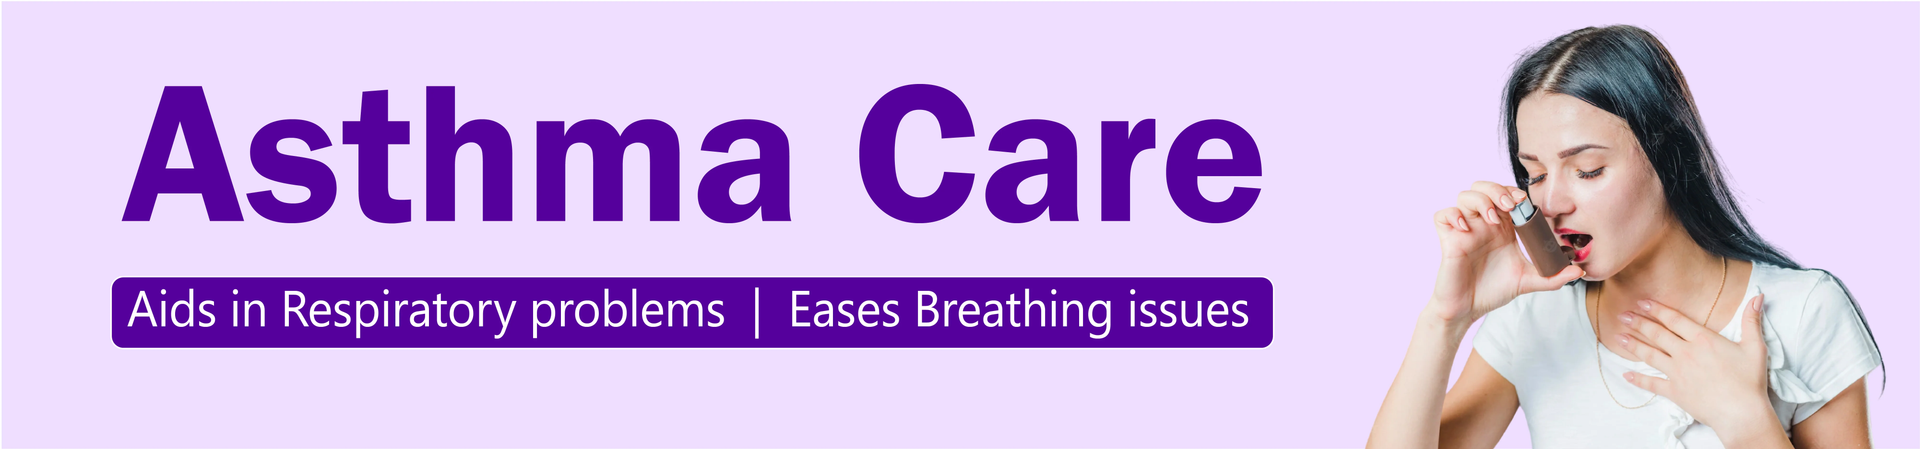 Ayurvedic Medicine for Asthma - Asthma Care